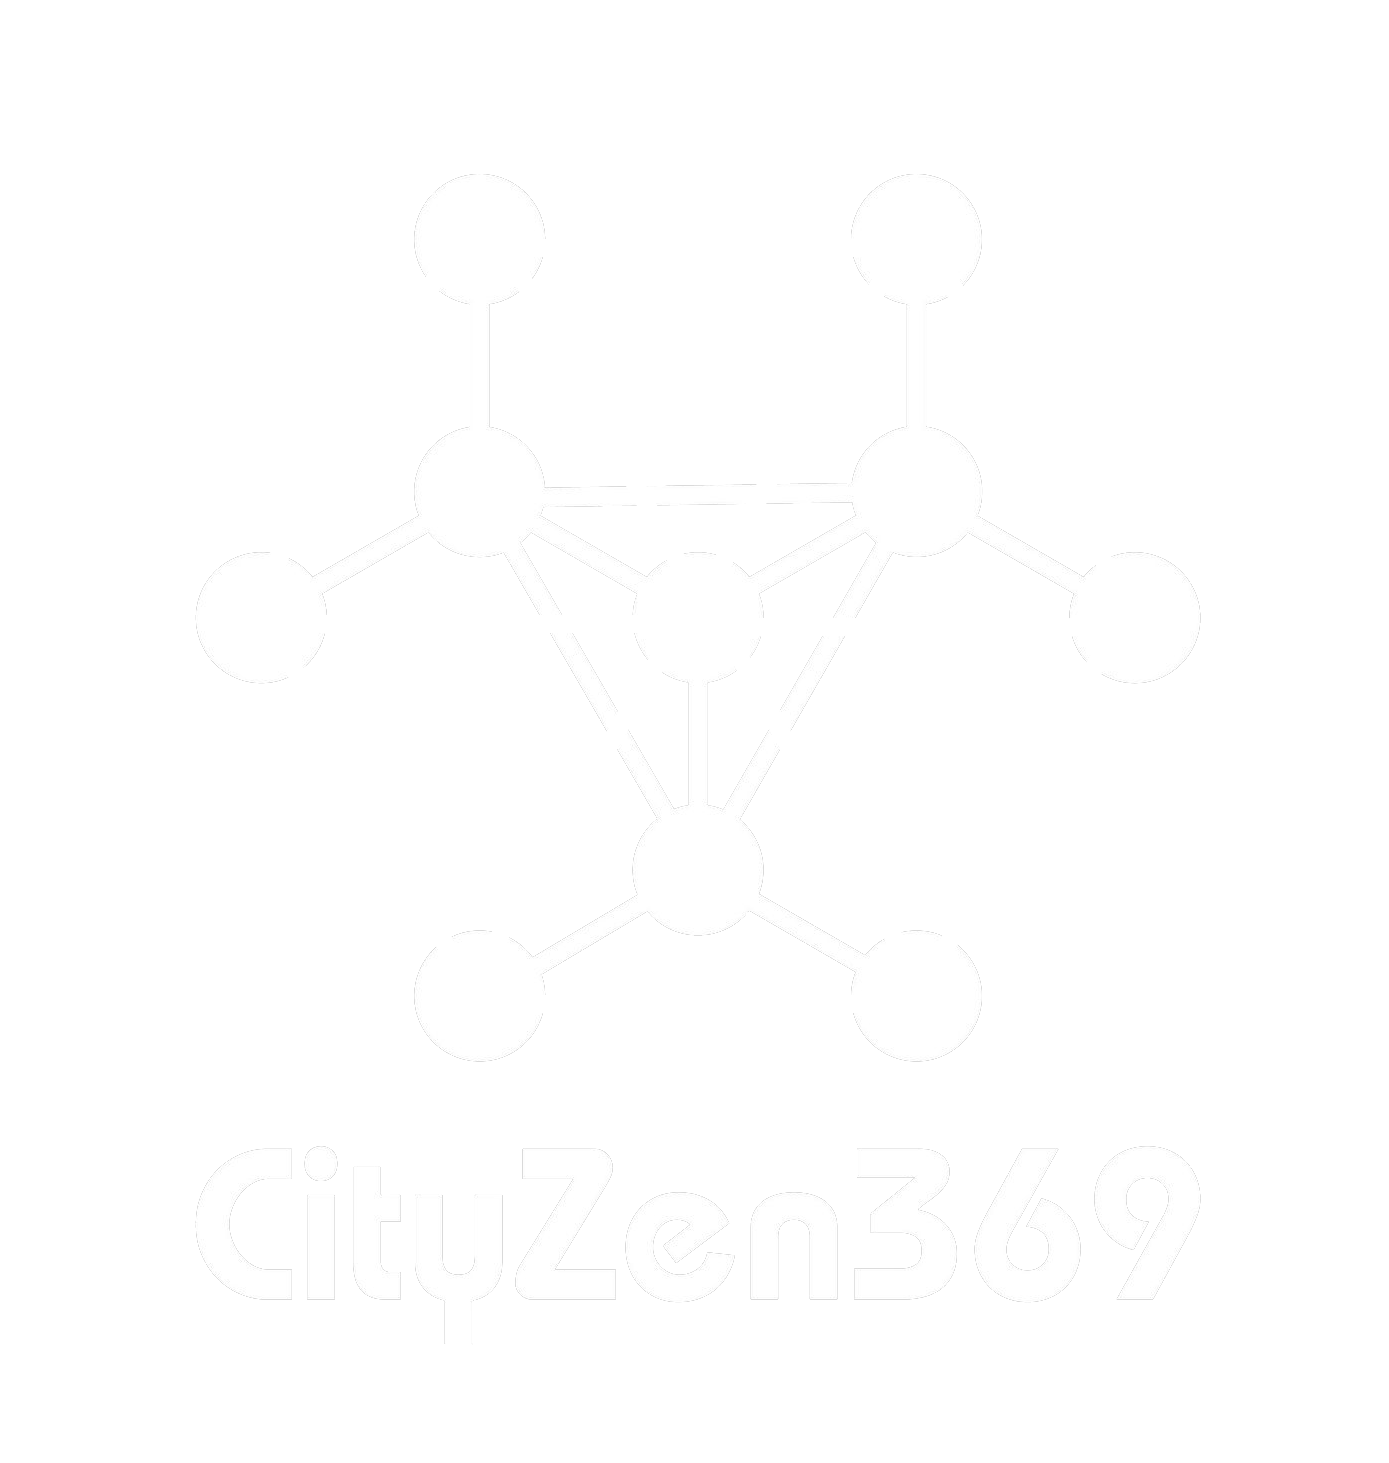 CityZen369